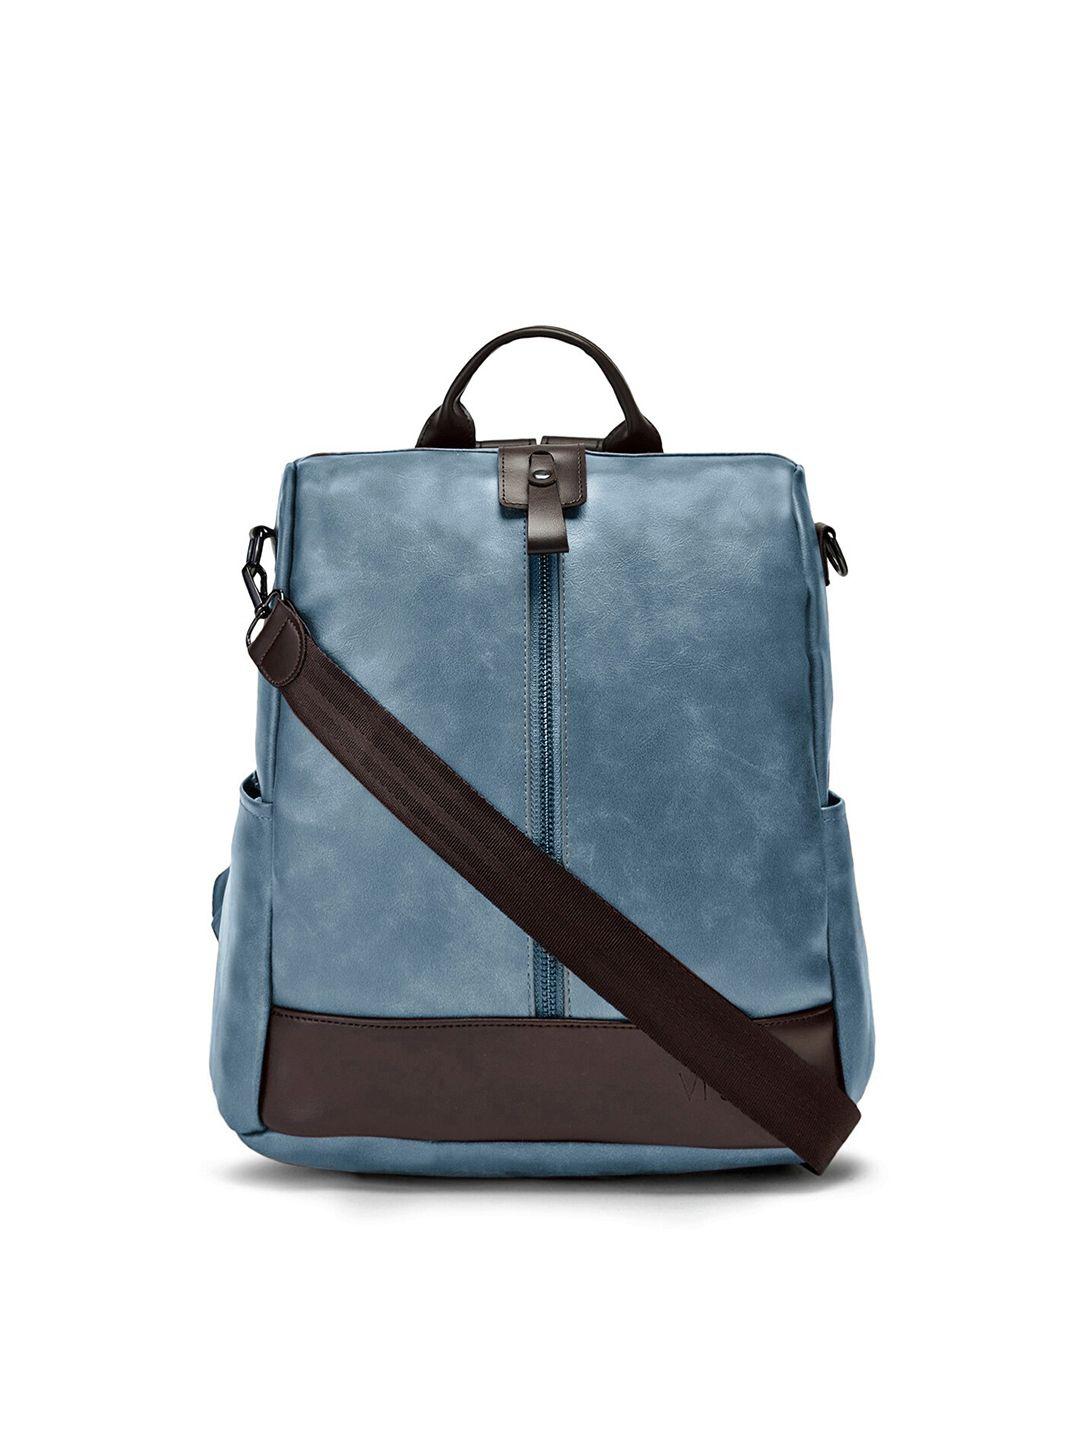 vismiintrend women blue & brown embellished backpack with earphone gate